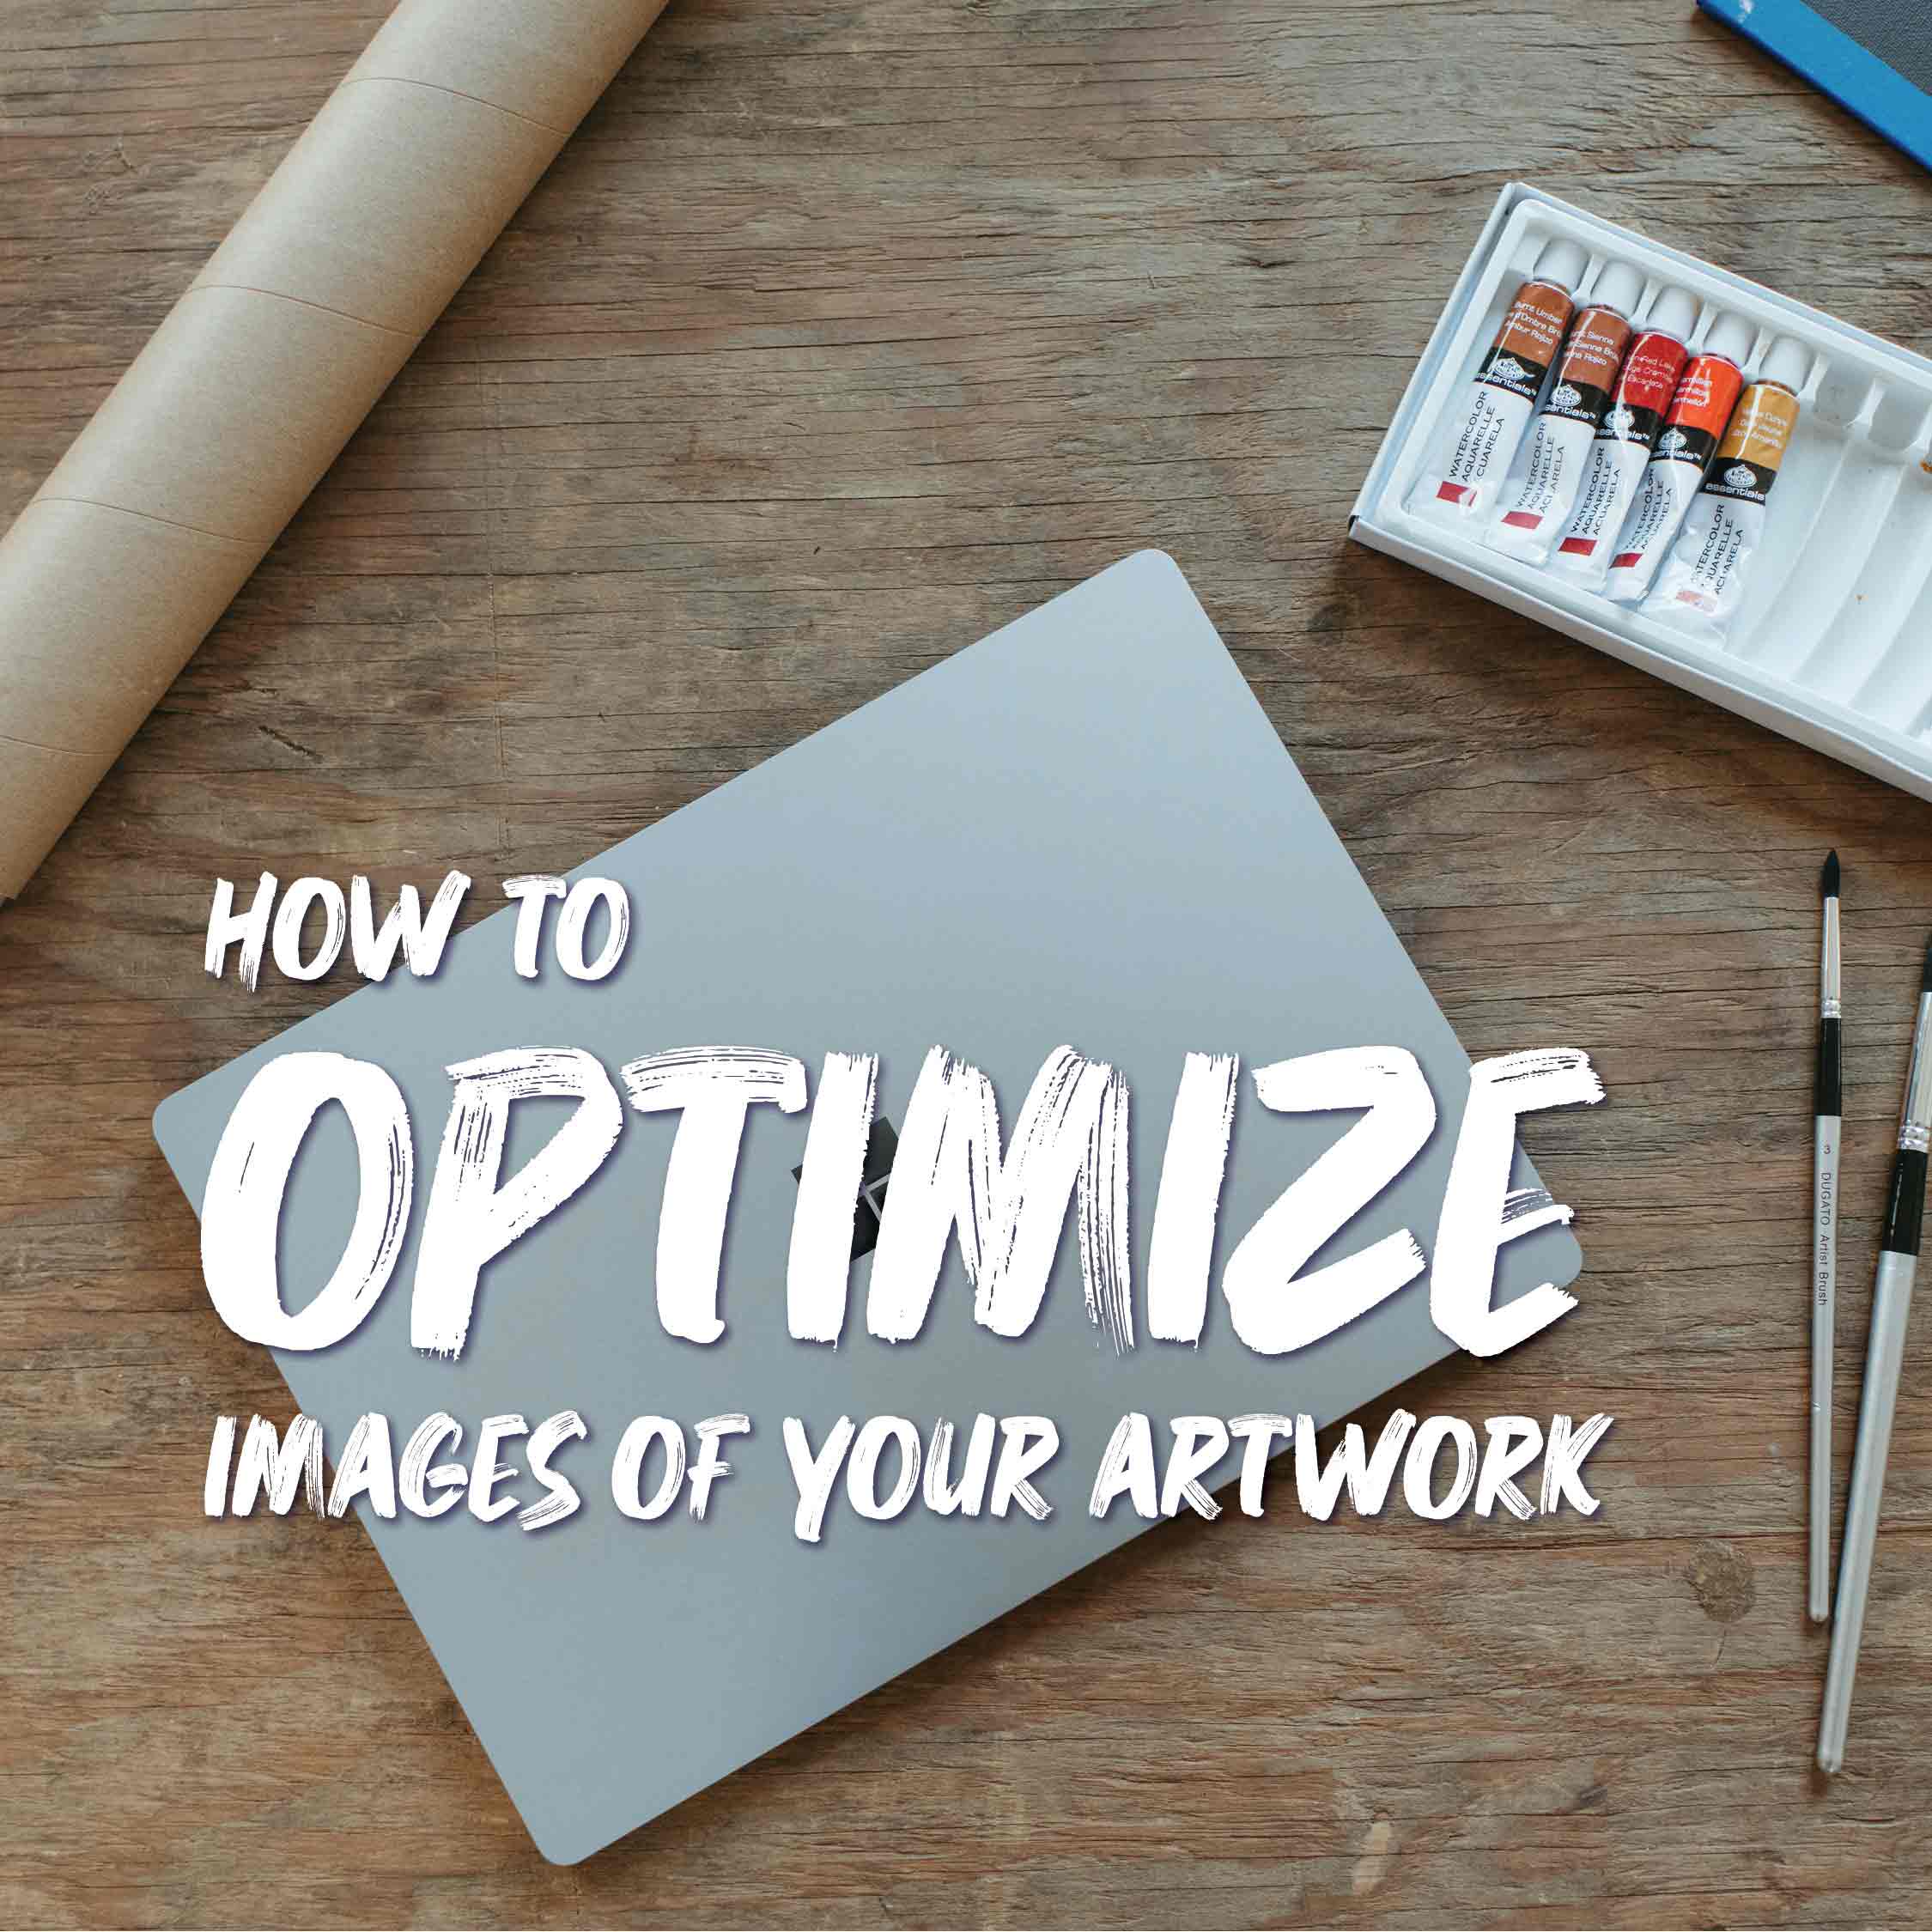 Image Optimization for Your Artwork